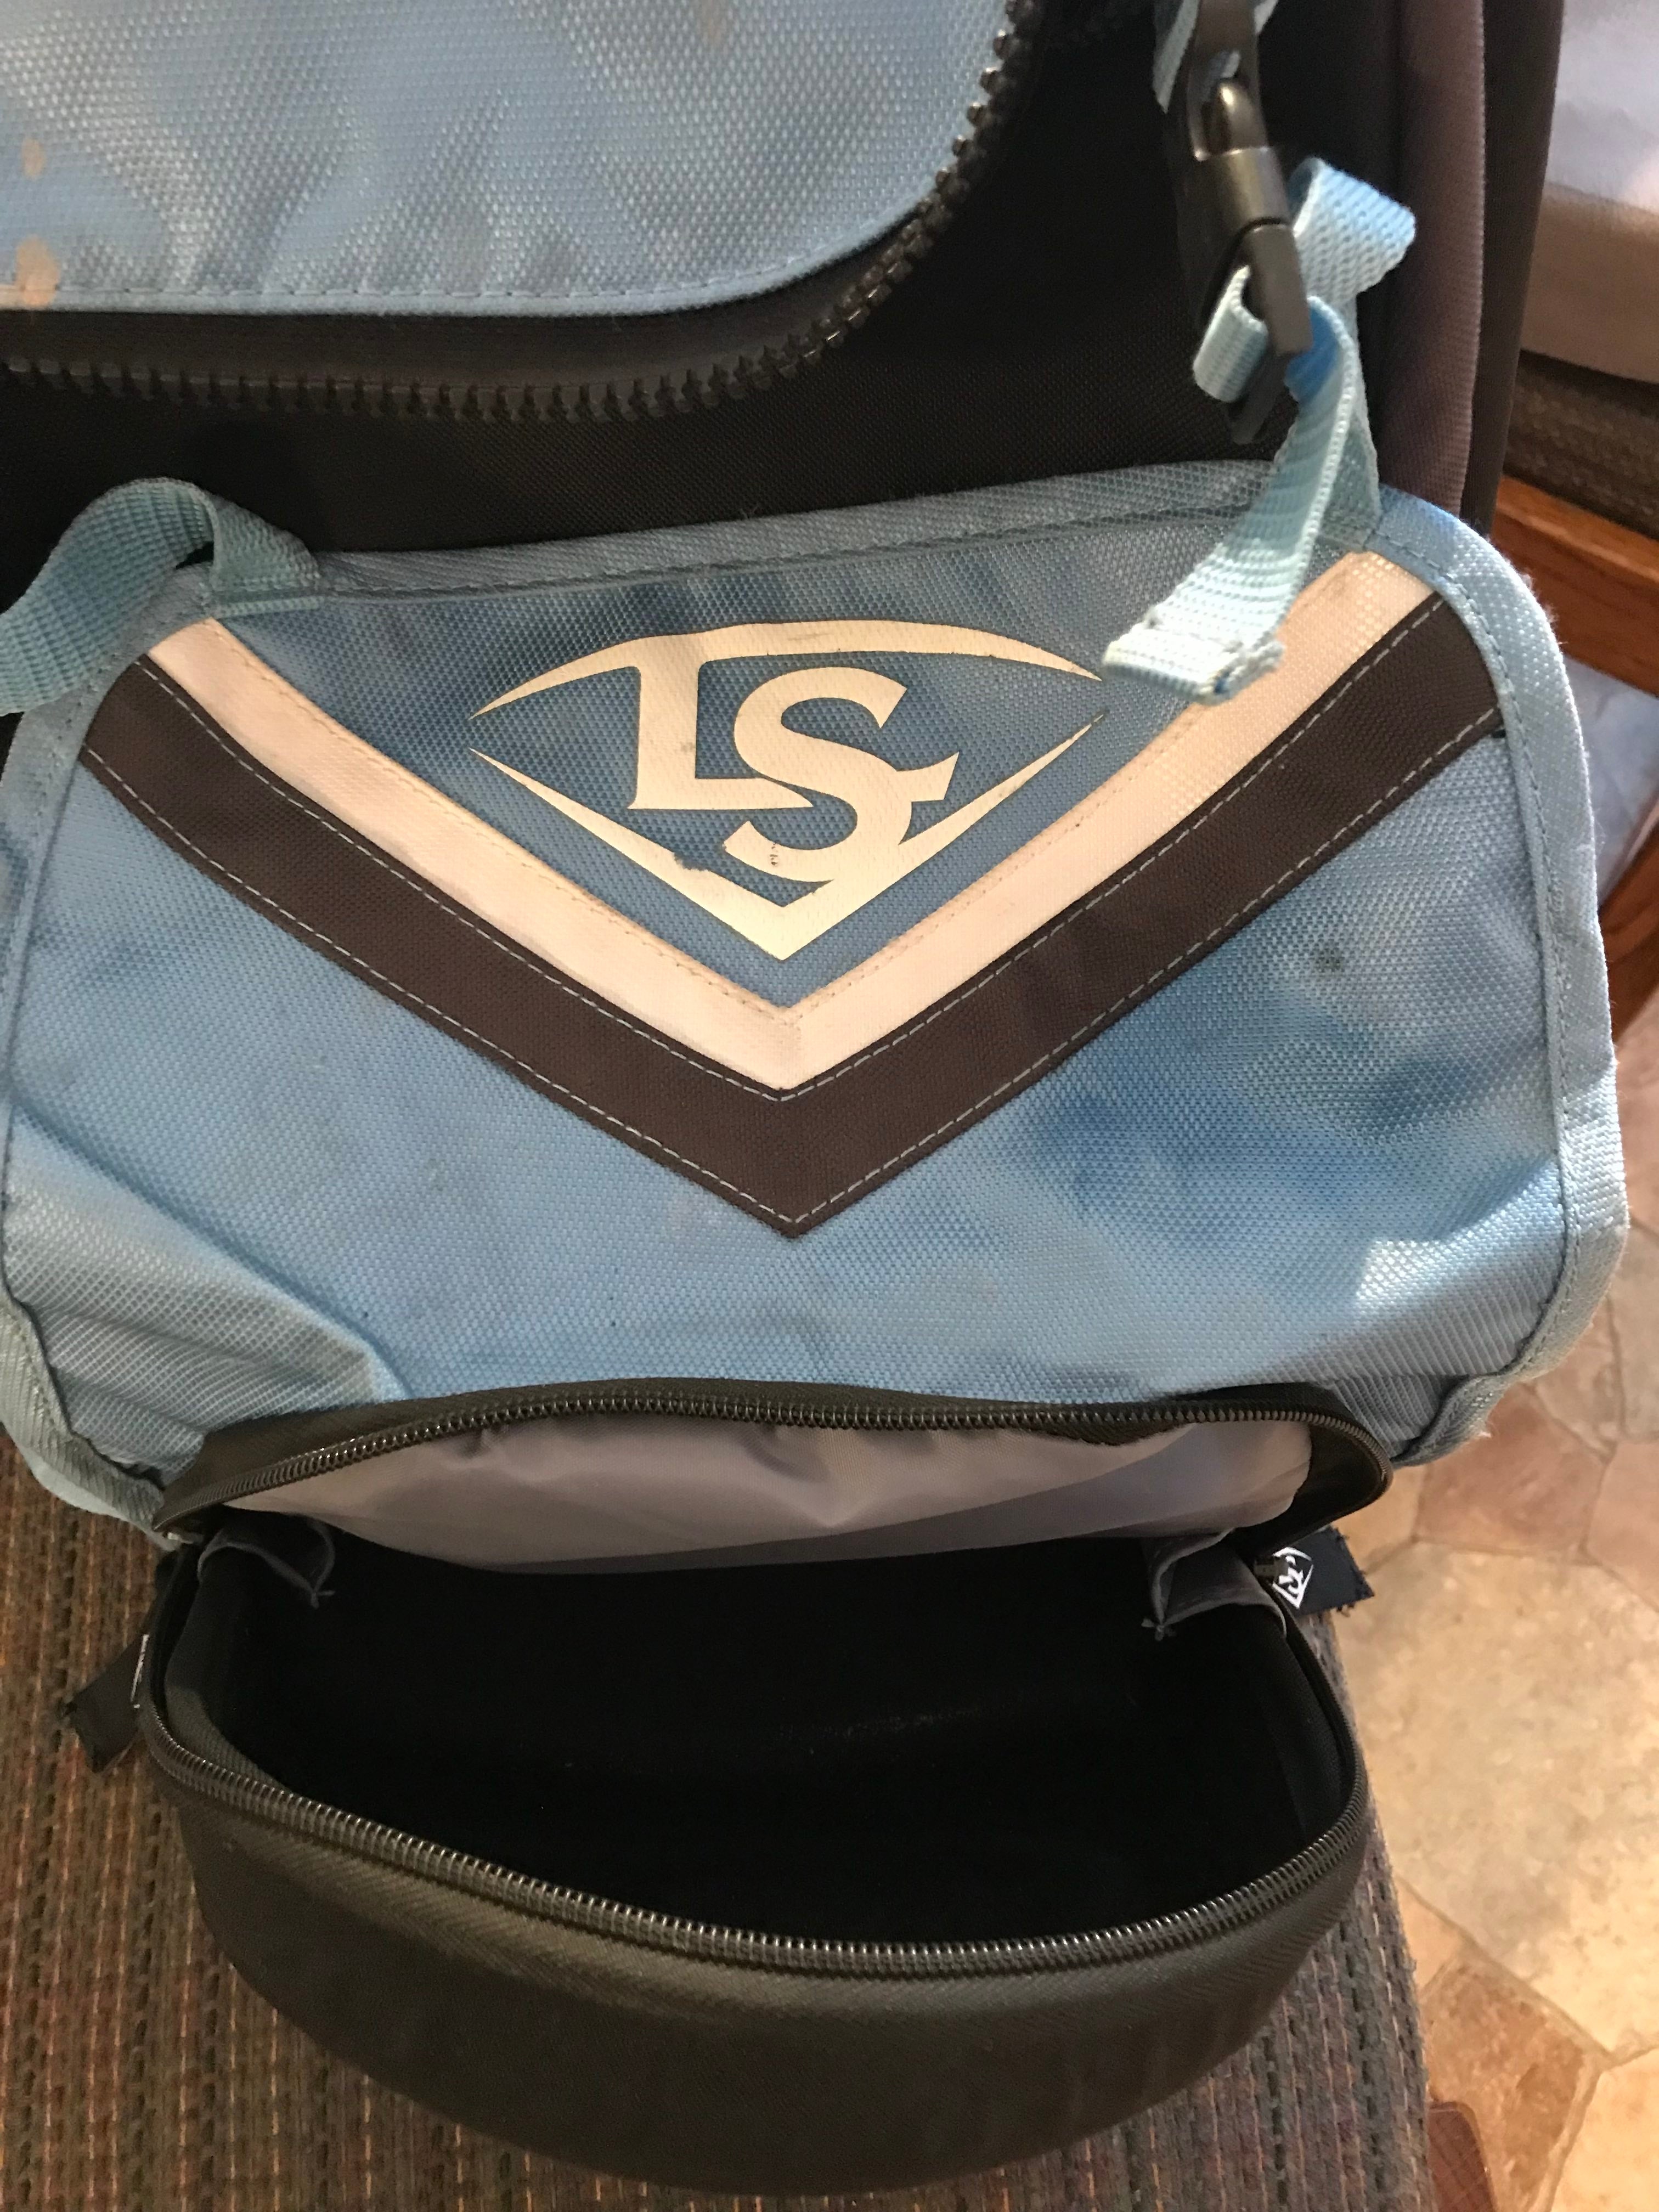 Louisville Slugger Bat Bag Backpack Blue/Gray for Sale in Goodyear